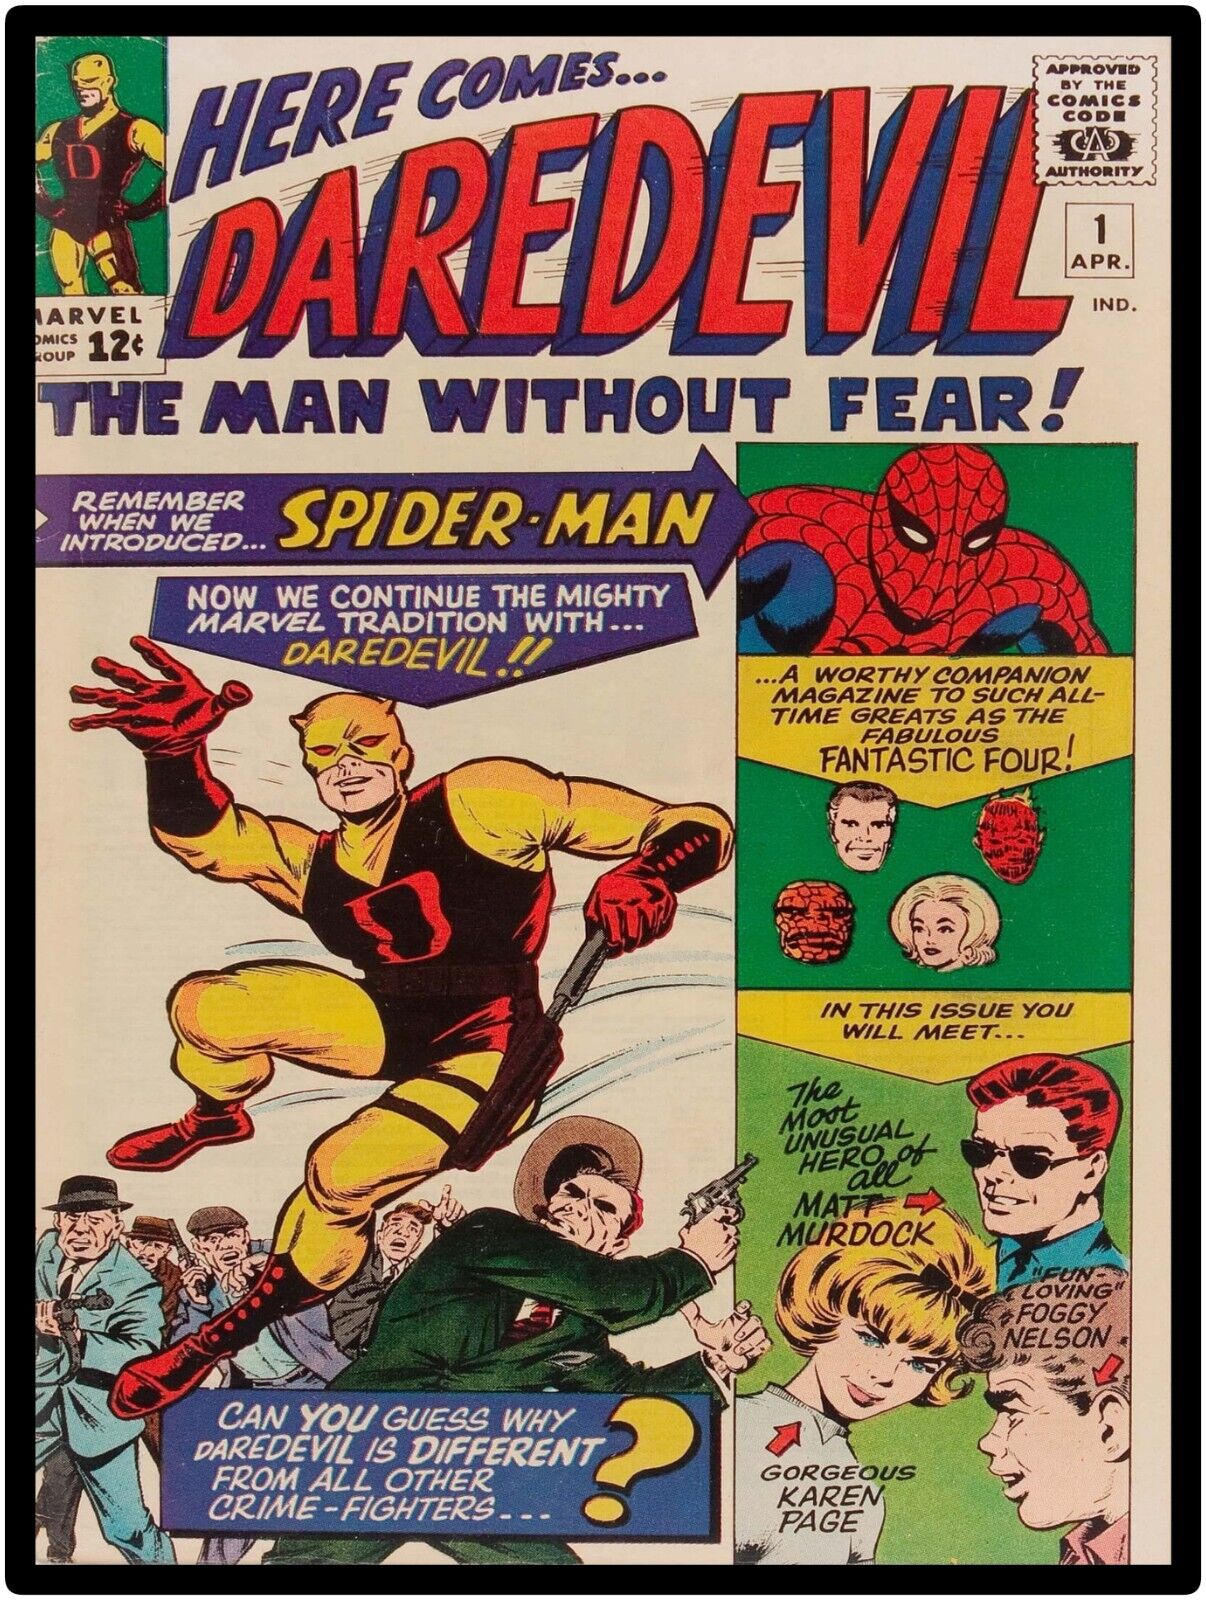 Here Comes Daredevil #1 Comic NEW Metal Sign: 9x12